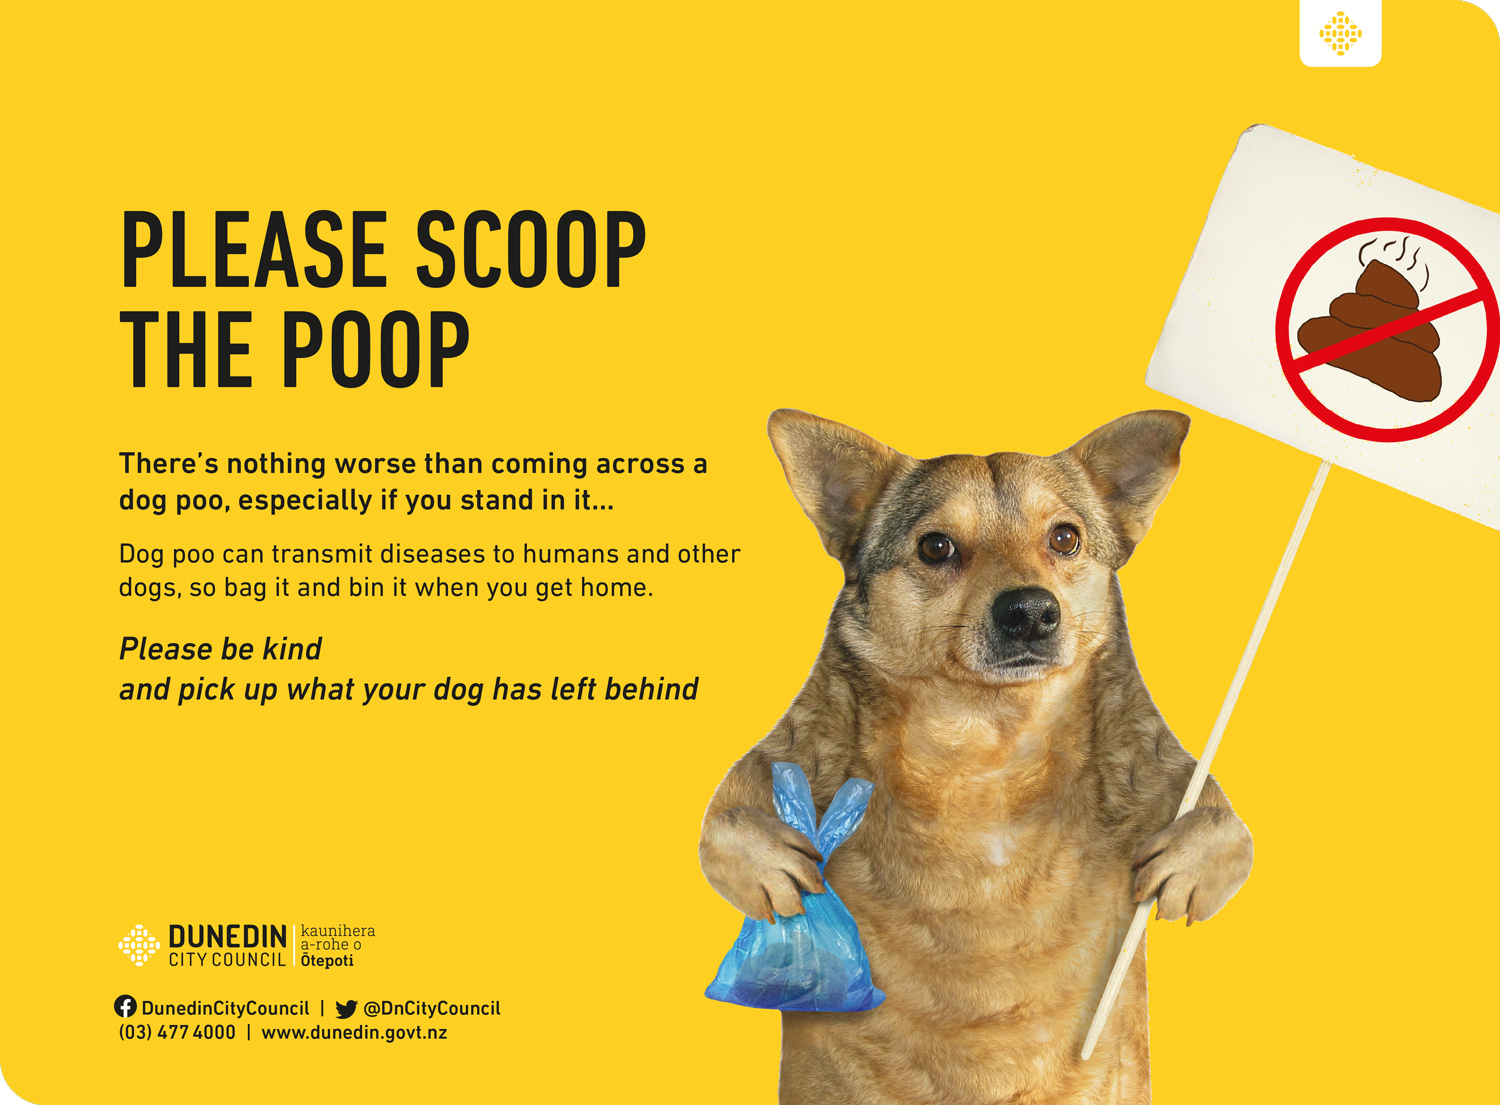 If you poop please scoop sign